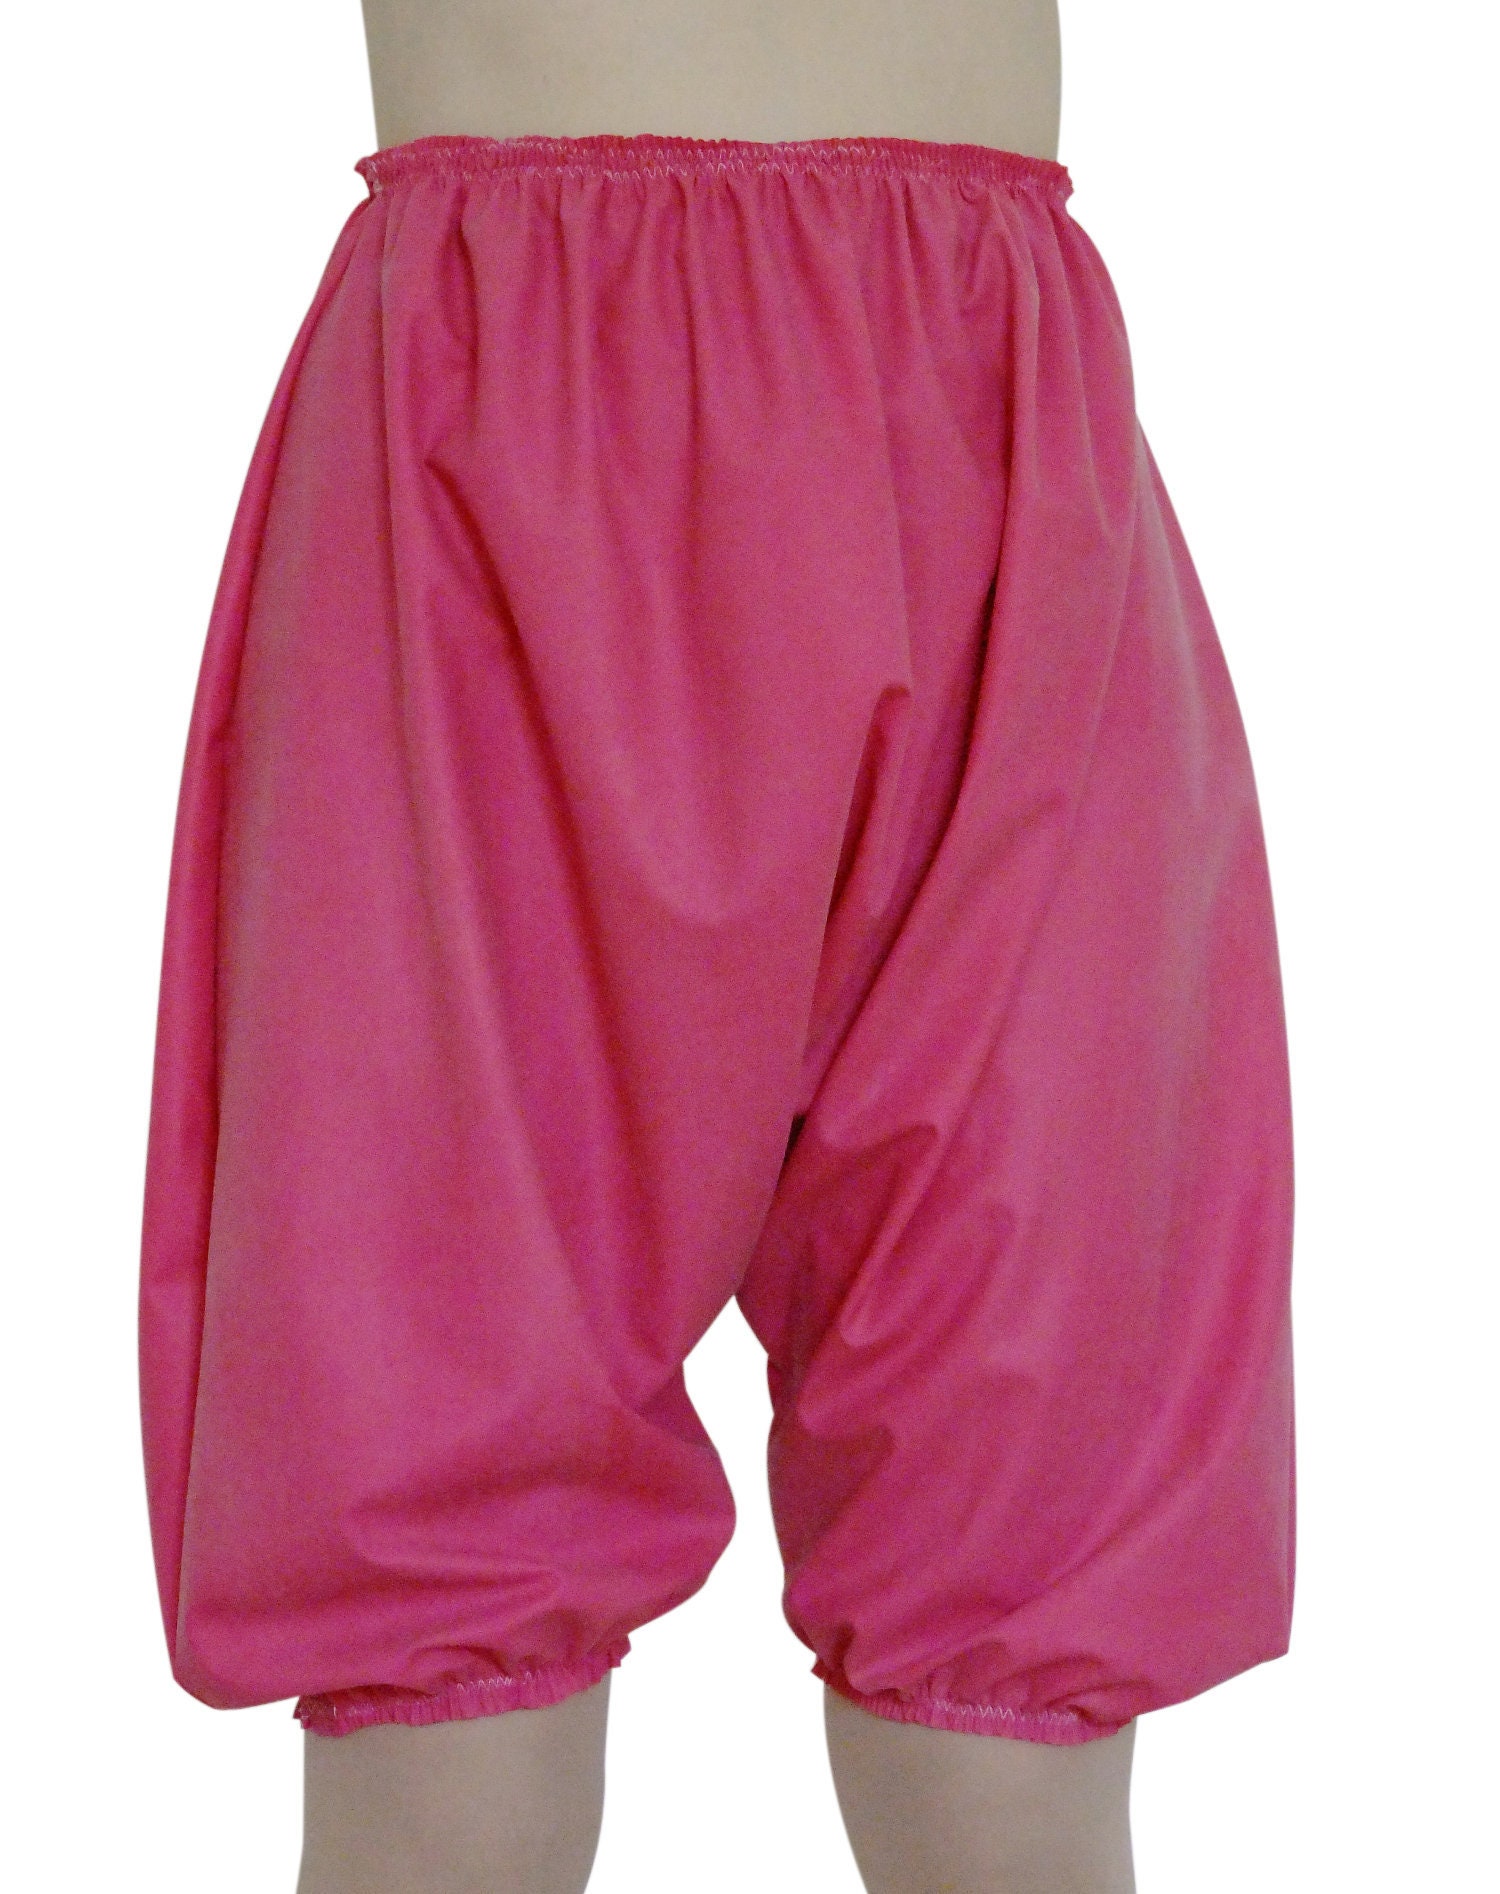 Rubber Bloomers Pants Panties Knickers Shorts Underwear. | Etsy